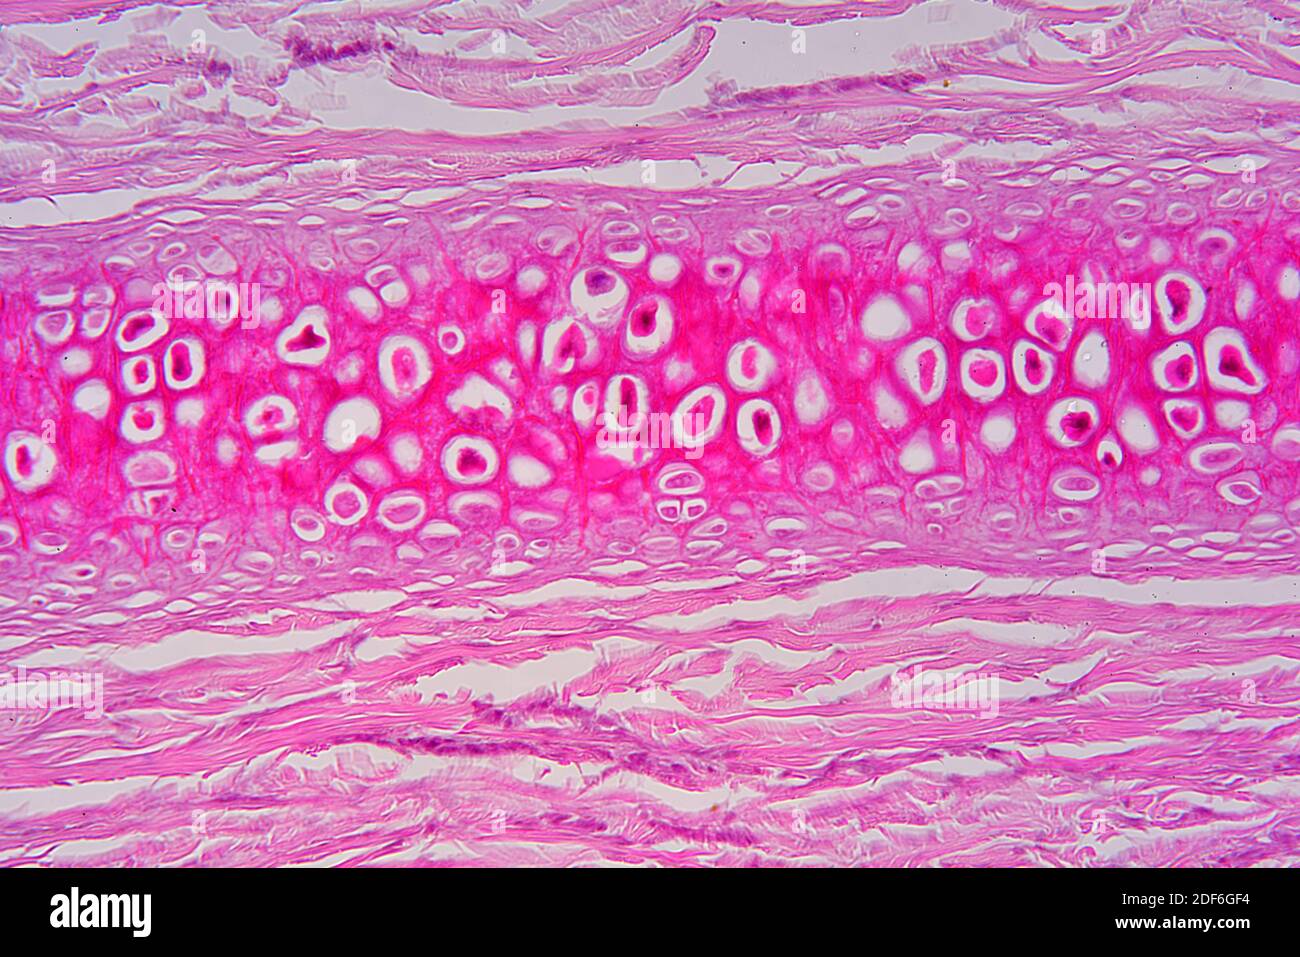 Elastic cartilaginous tissue from the ear showing chondrocytes, elastin fibers and matrix. Optical microscope X200. Stock Photo